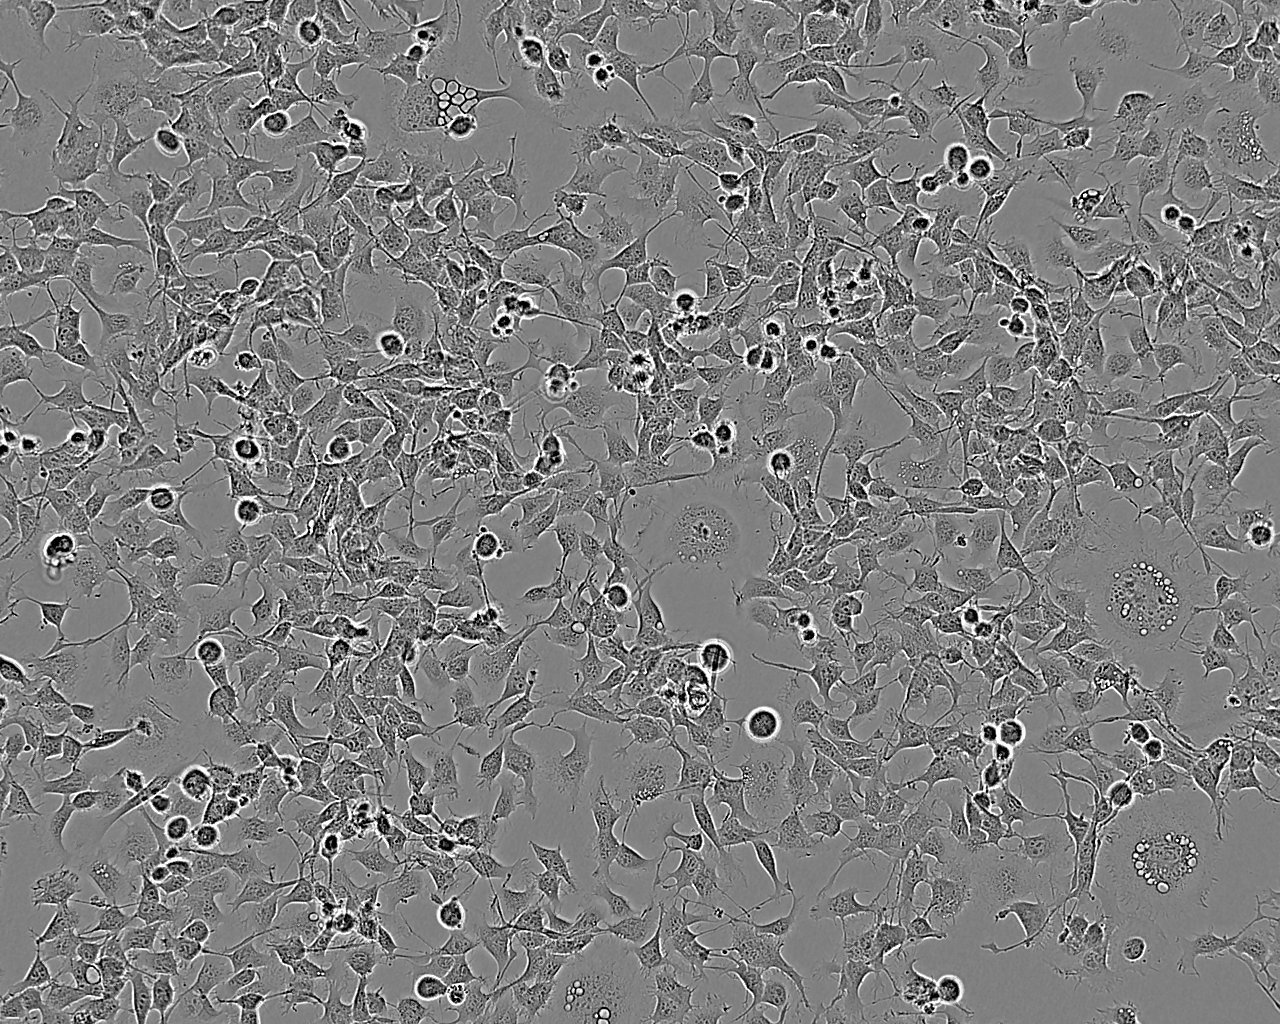 SNU-398 Cells|人肝癌细胞系,SNU-398 Cells